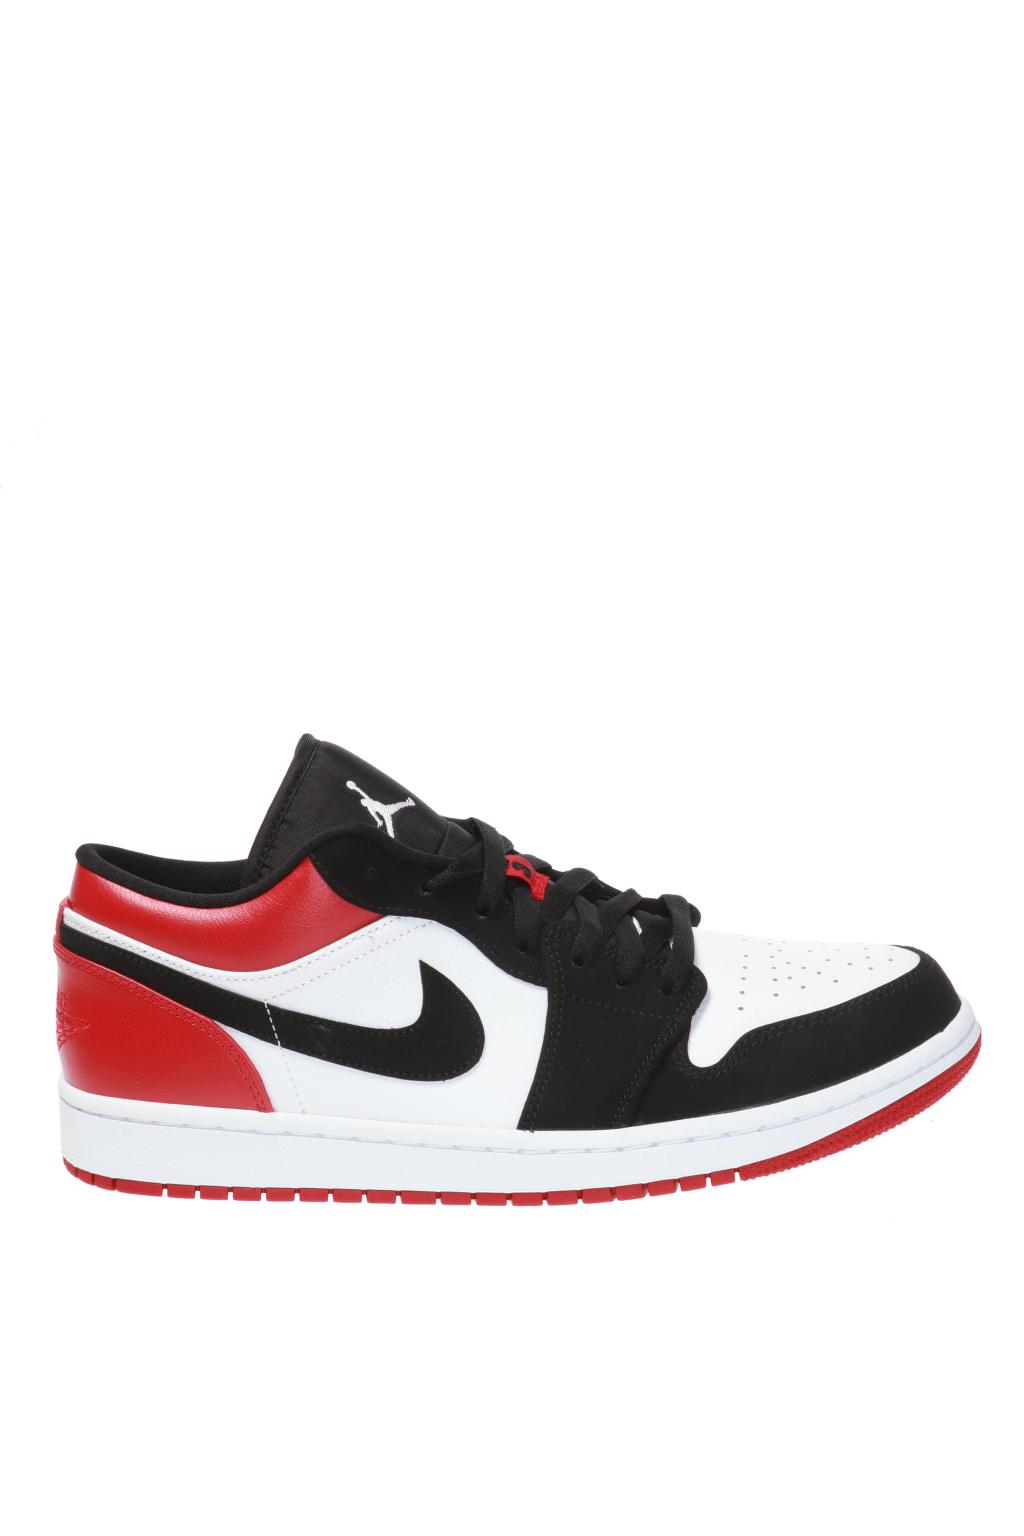 Jordan 1 Low' sport shoes Nike - Vitkac 